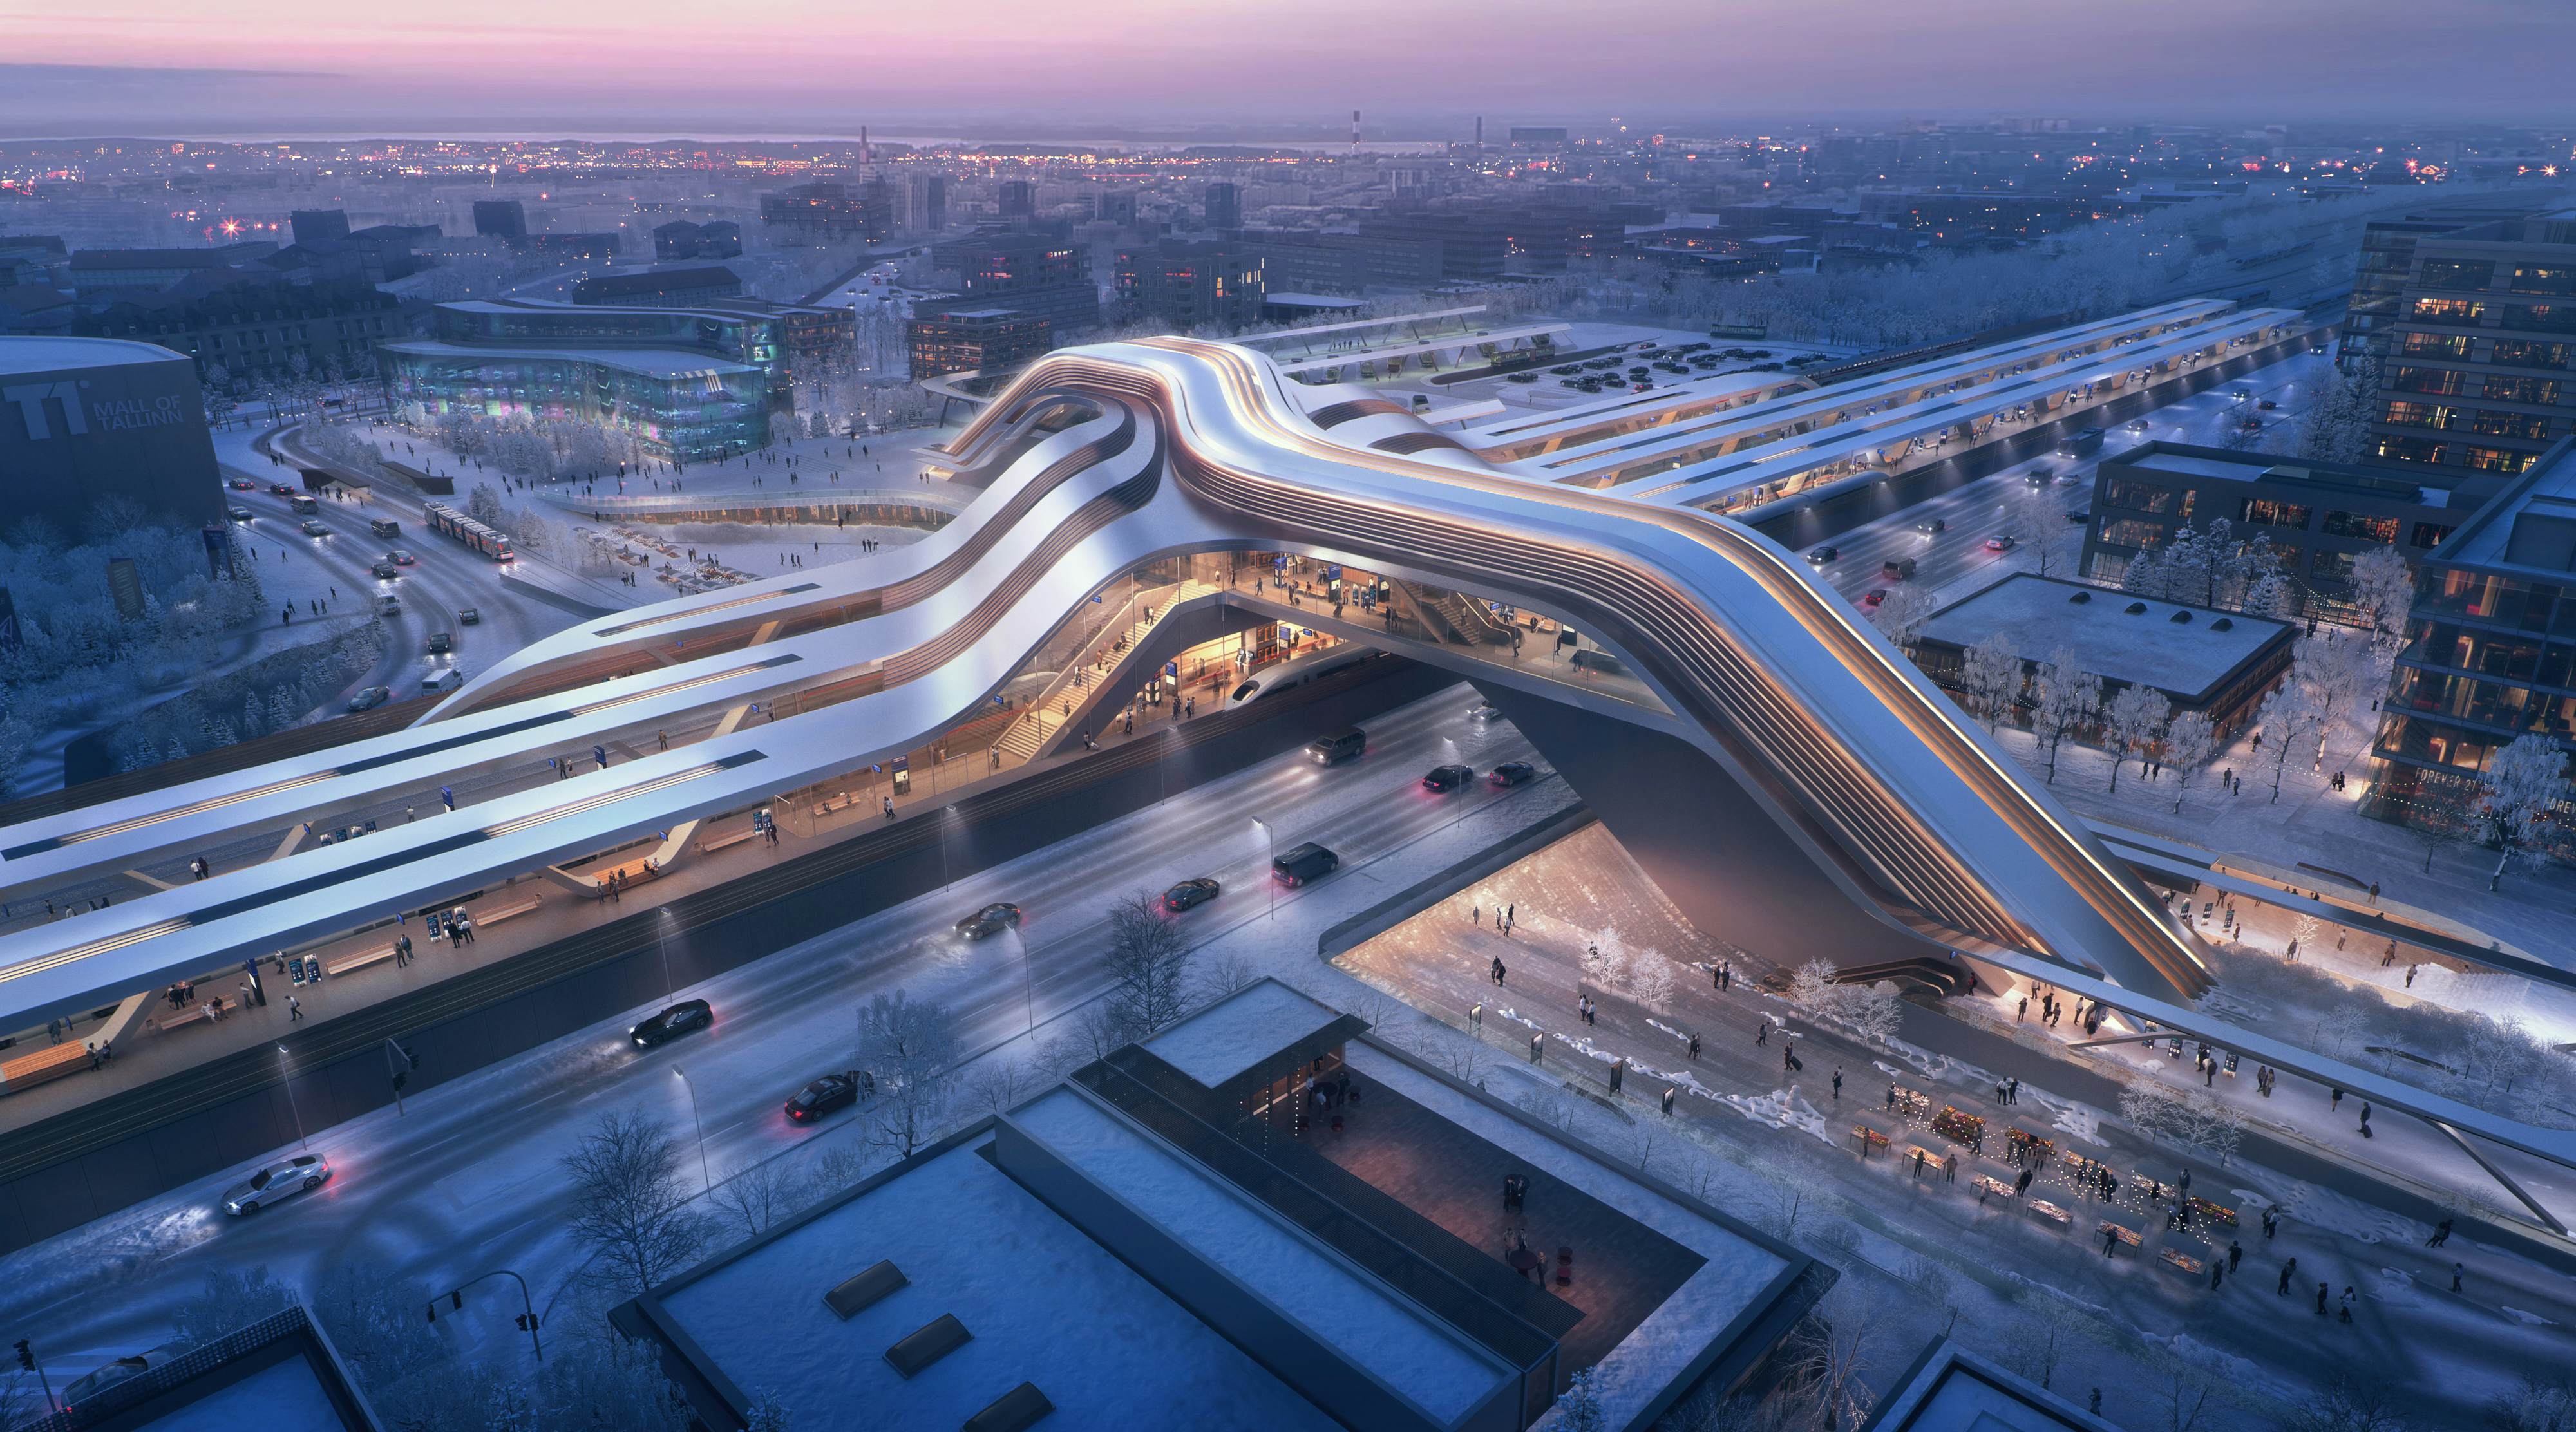 Tallinn to open futuristic Zaha Hadid-designed train station - Lonely Planet